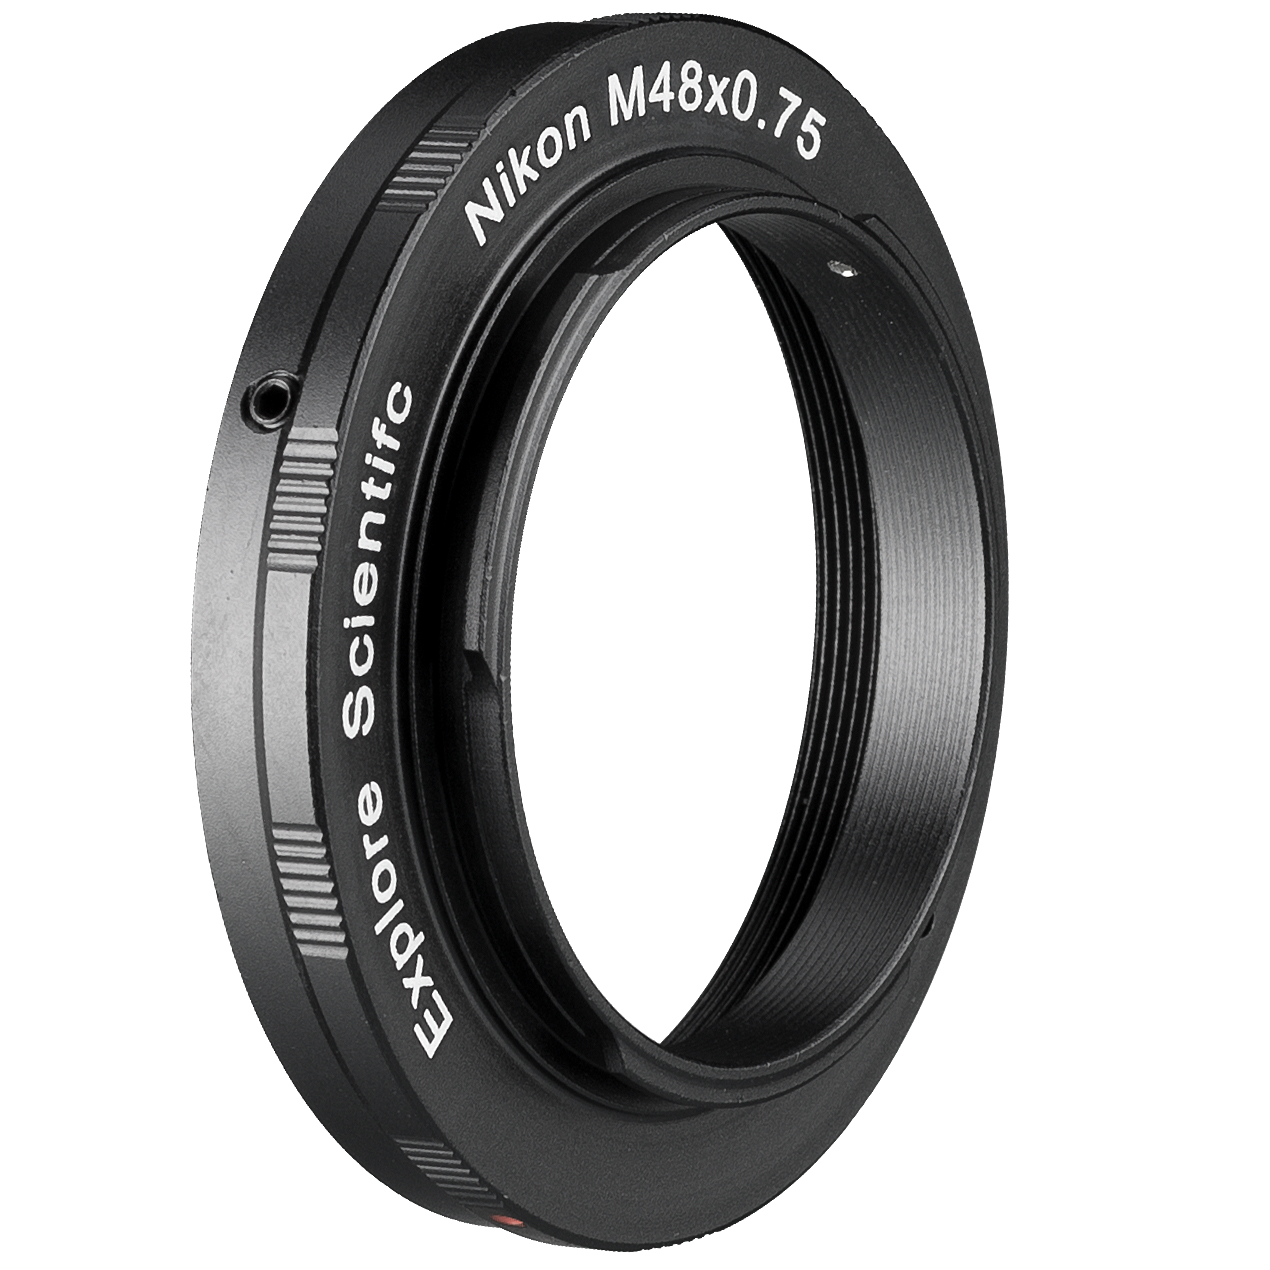 EXPLORE SCIENTIFIC Camera-Ring M48x0.75 for Nikon